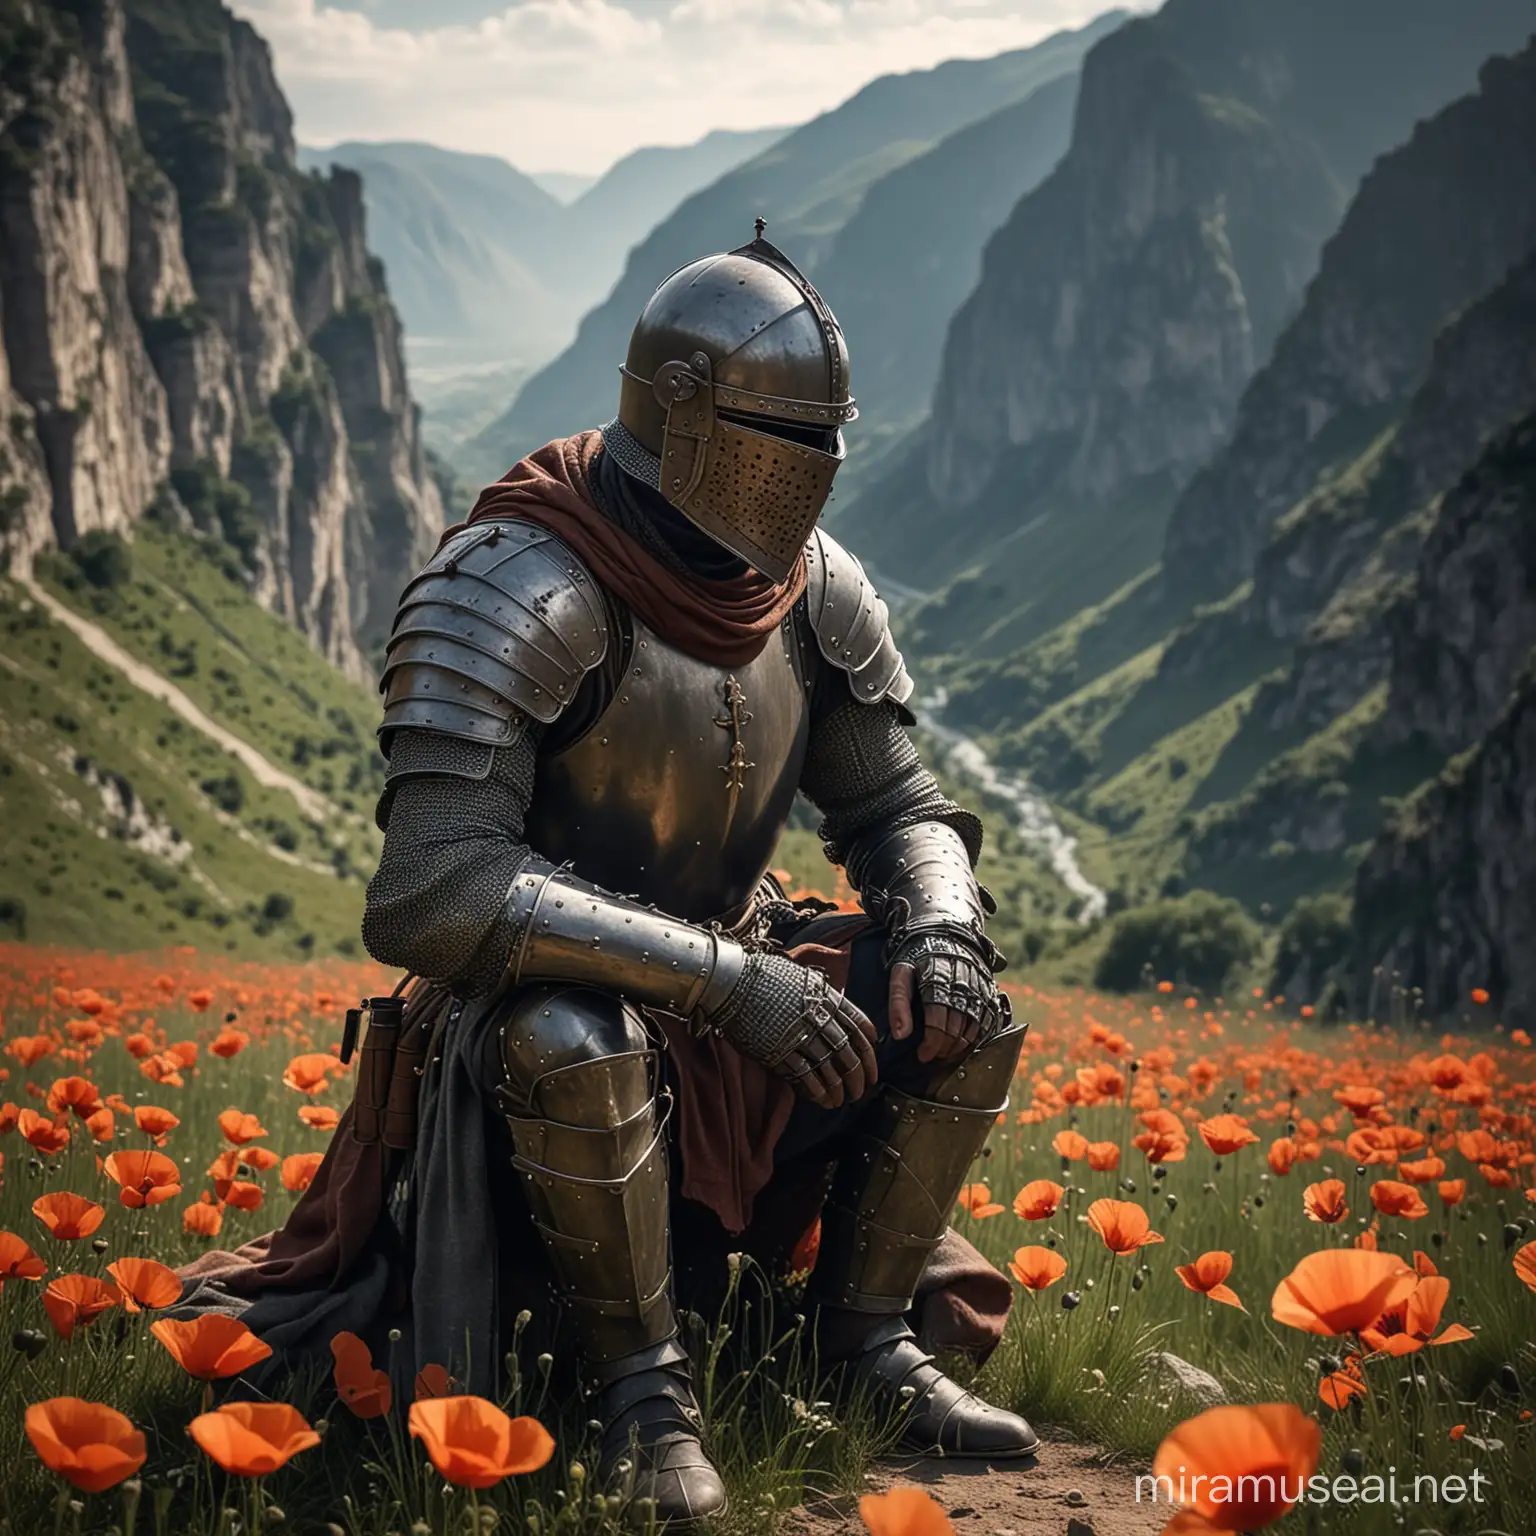 Melancholic Medieval Knight Contemplating in Poppy Field